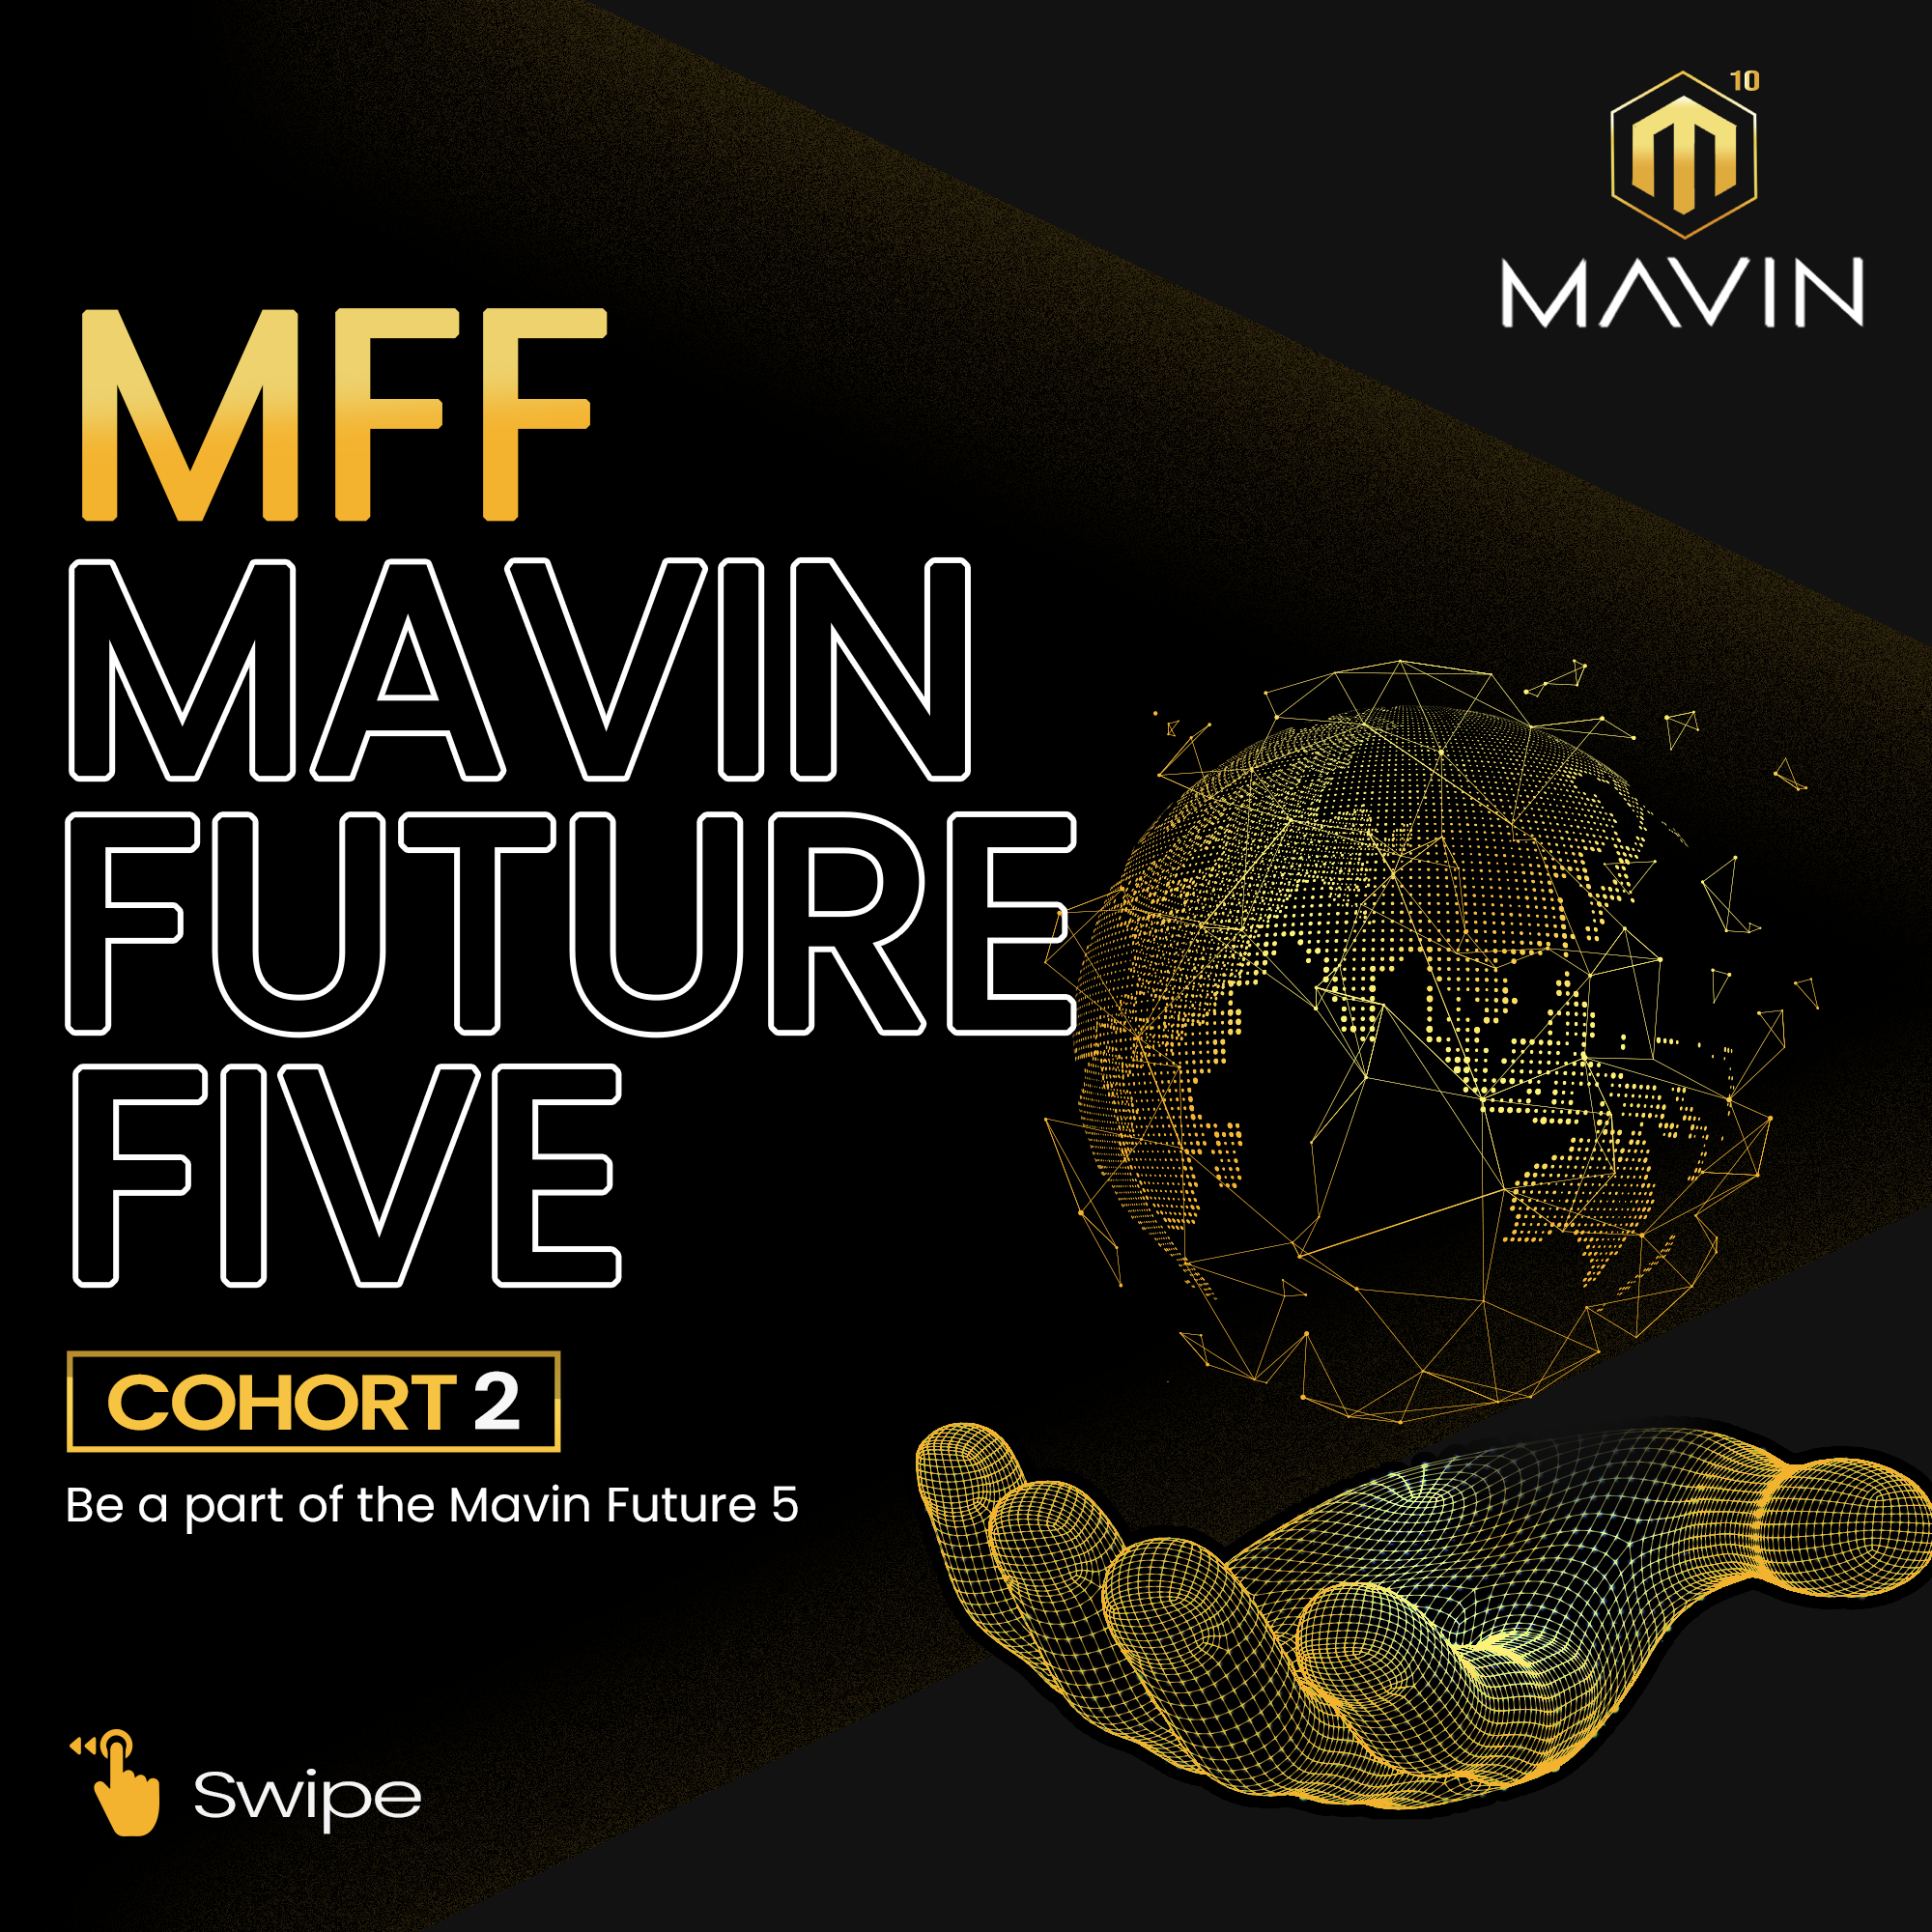 Mavin Future Five Cohort 2.0 Kicks Off